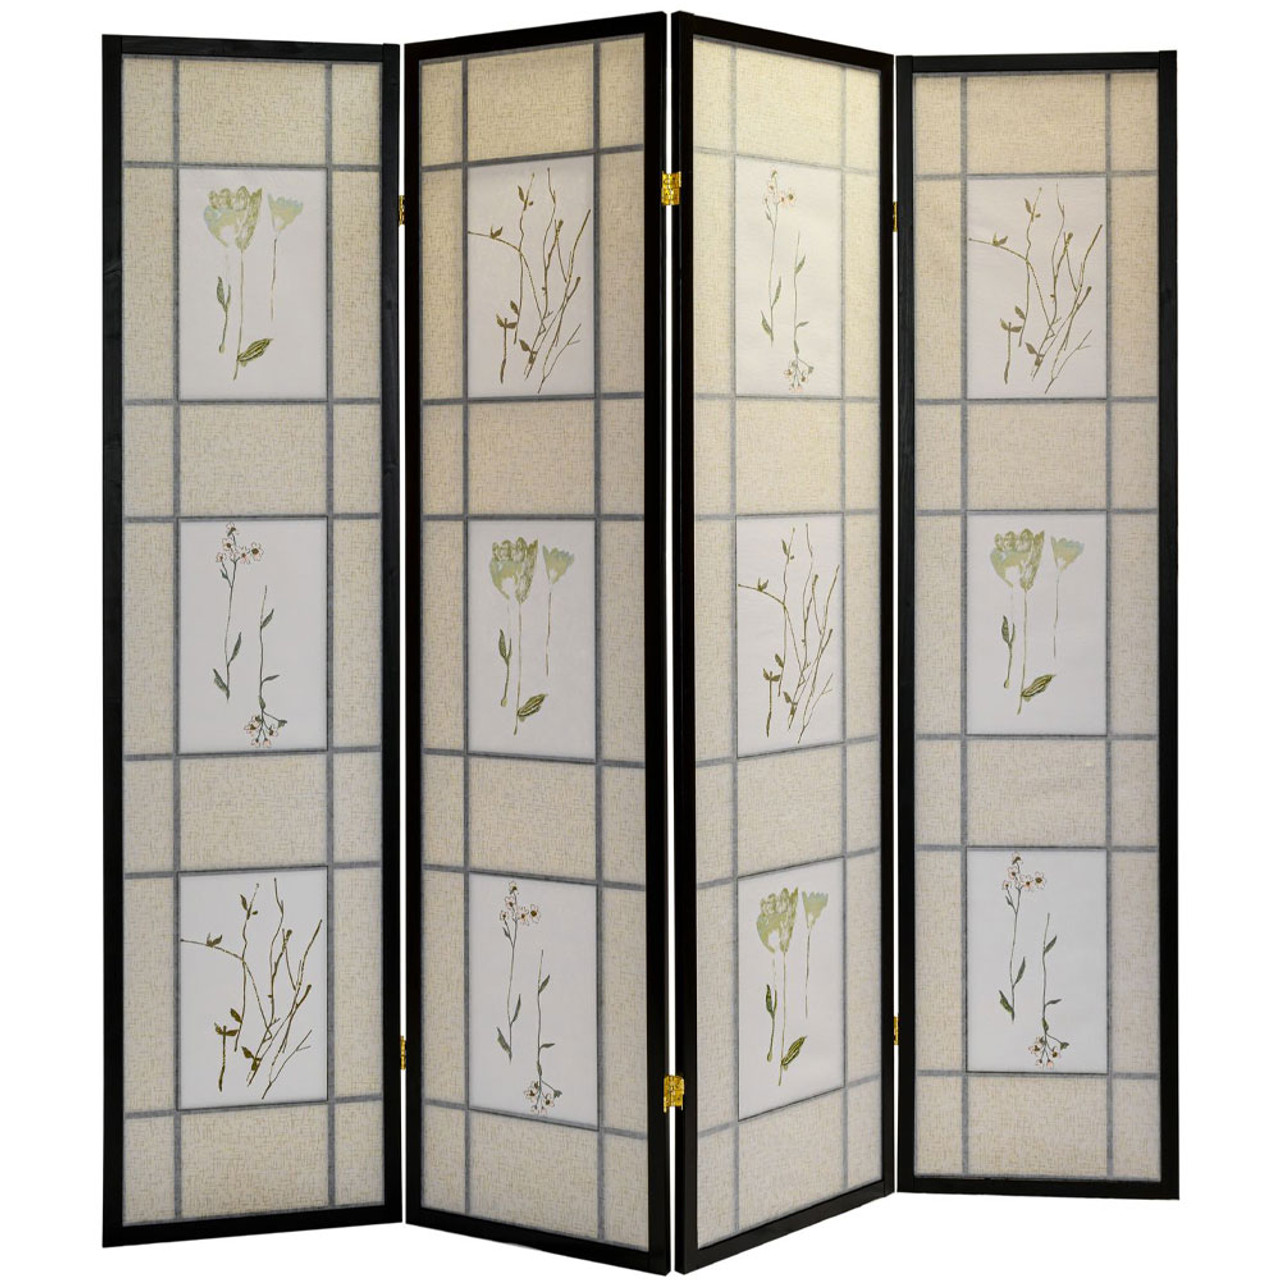 3 or 4 Panels Room Divider Privacy Screen Floral Botanical Print Black